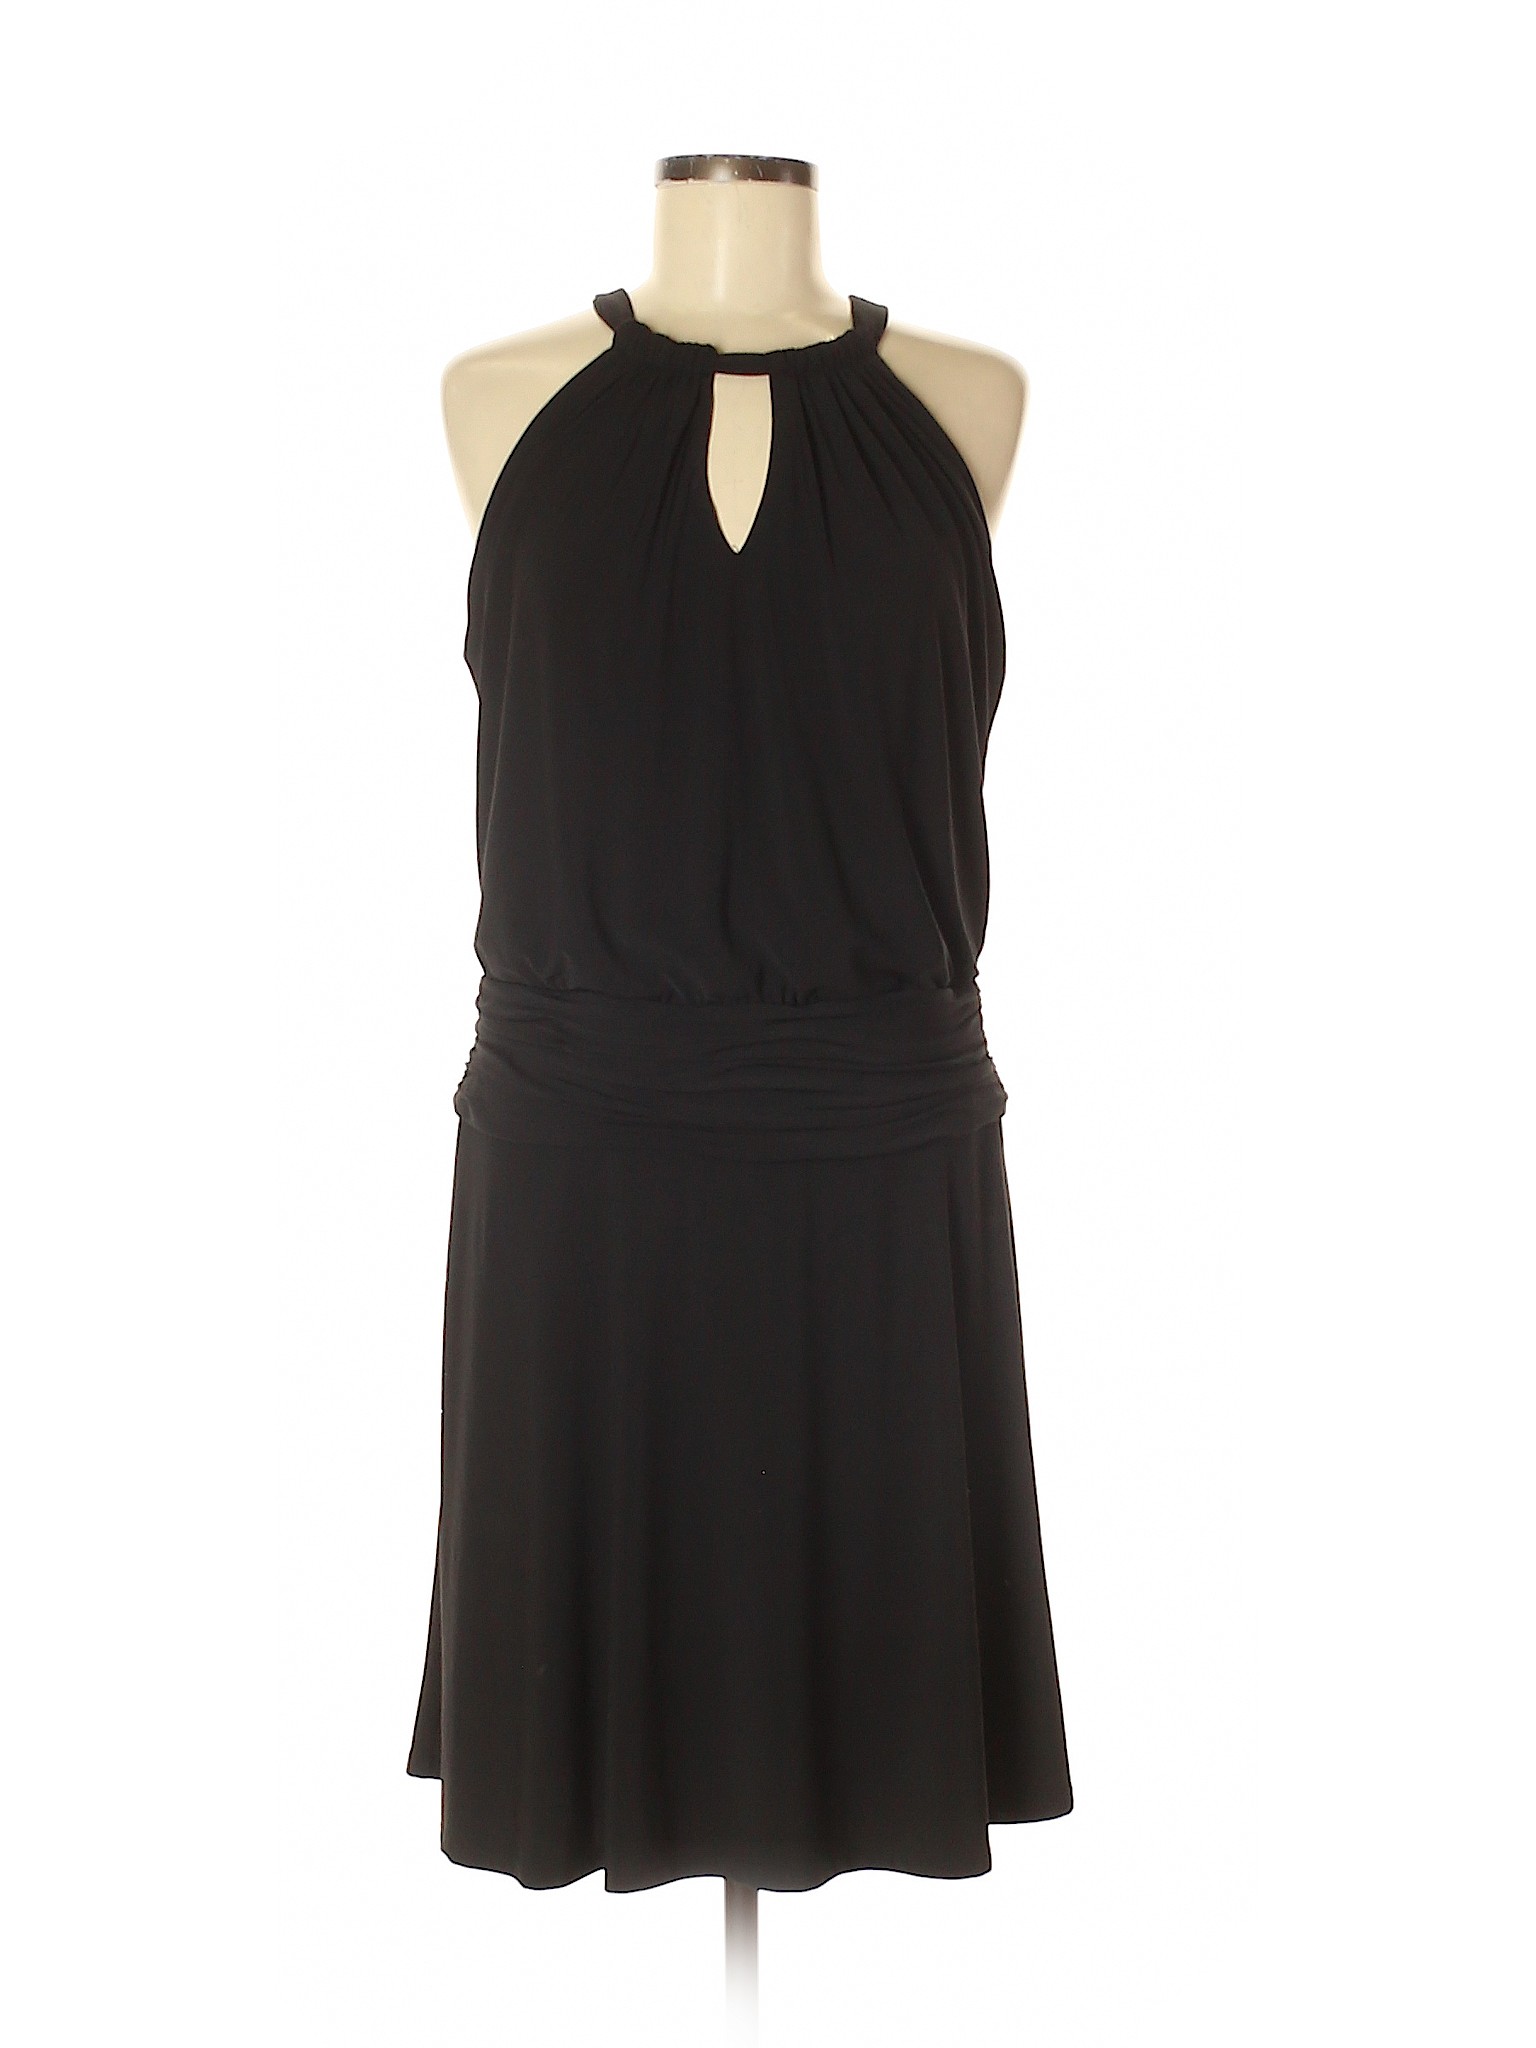 Suzi Chin for Maggy Boutique Women Black Cocktail Dress 8 | eBay